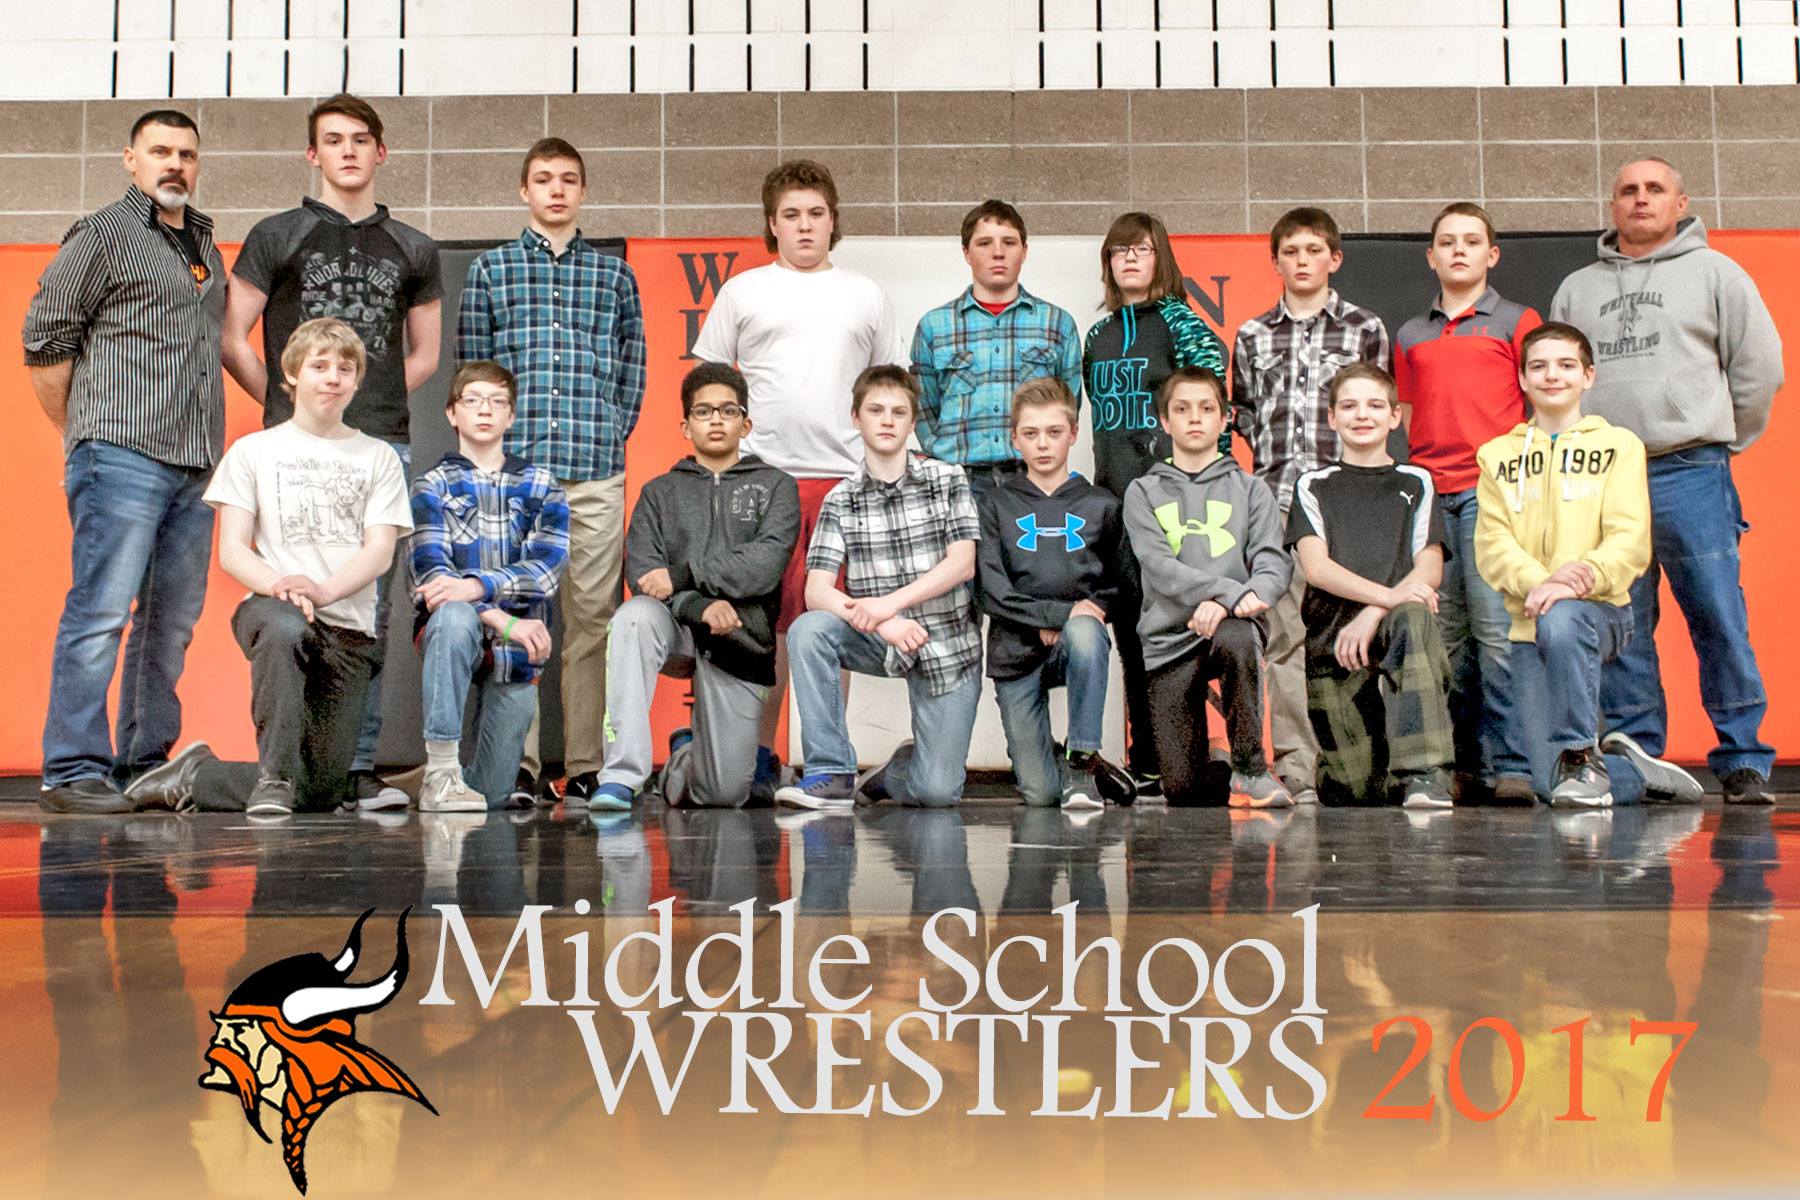 Middle school wrestling team 2017 